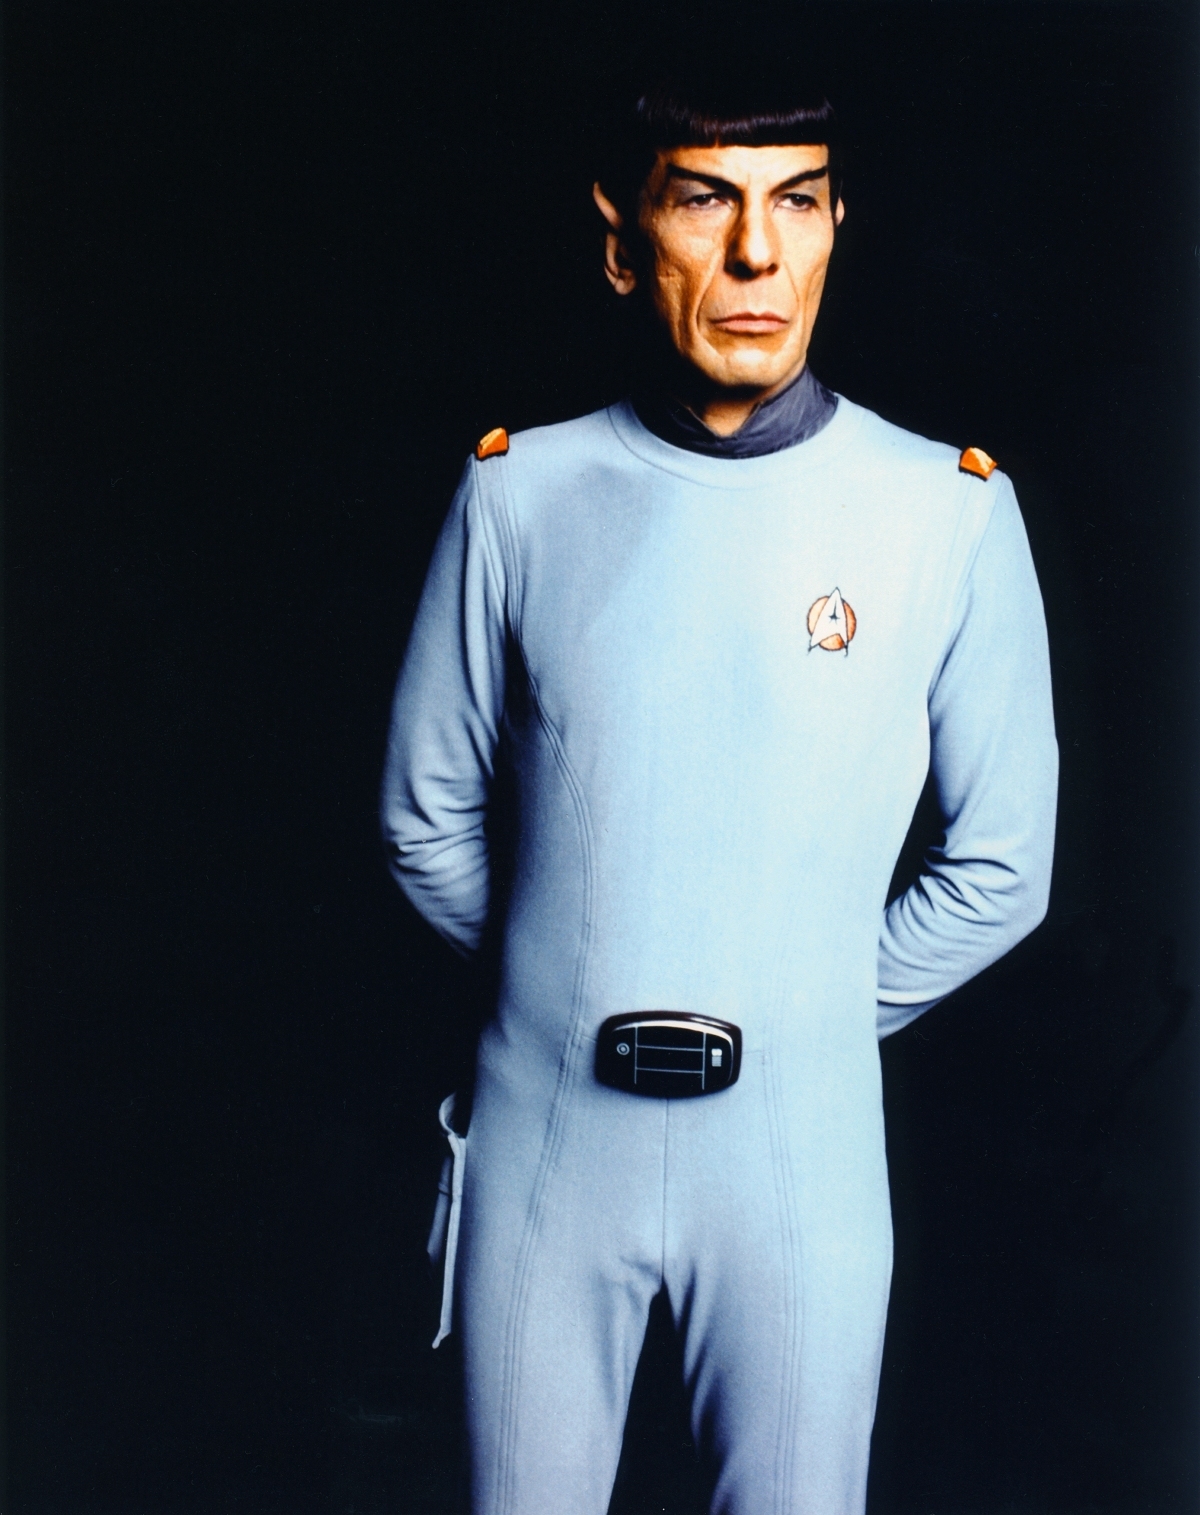 star trek spock personality